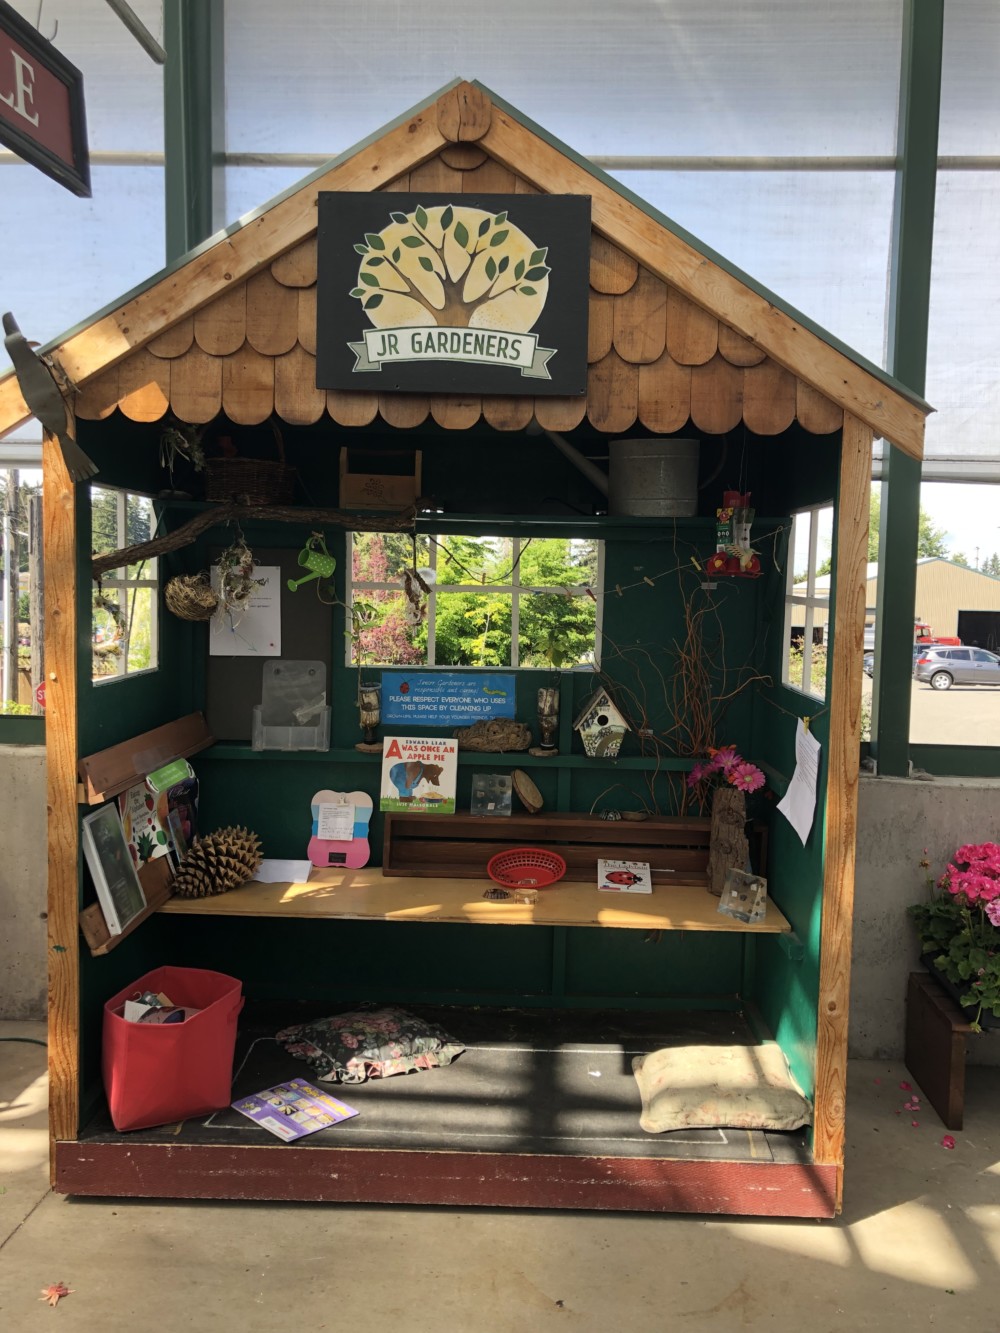 Sky Nursery in Shoreline, Washington, created a simple garden hut for kids.